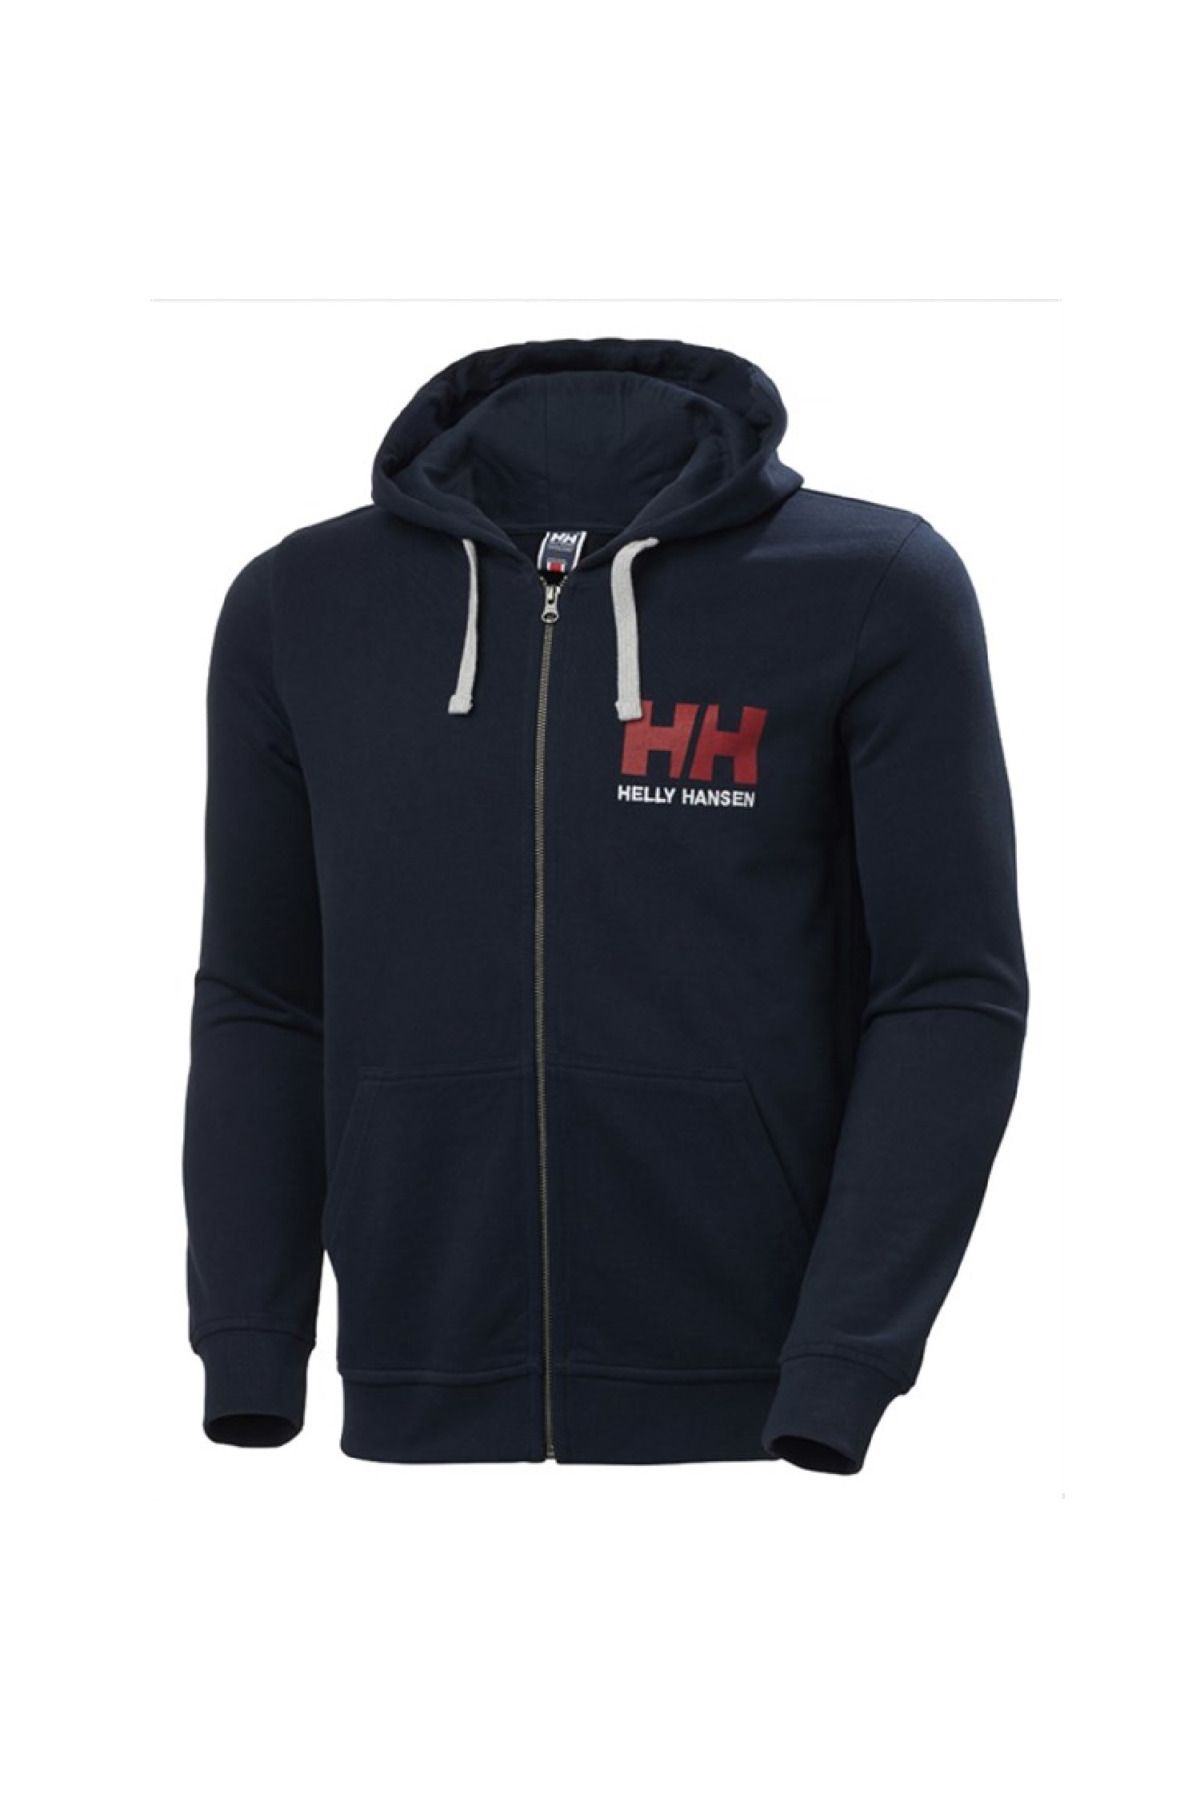 Helly Hansen Hh Logo Full Zip Hoodie Erkek Sweatshirt Hha.34163-5